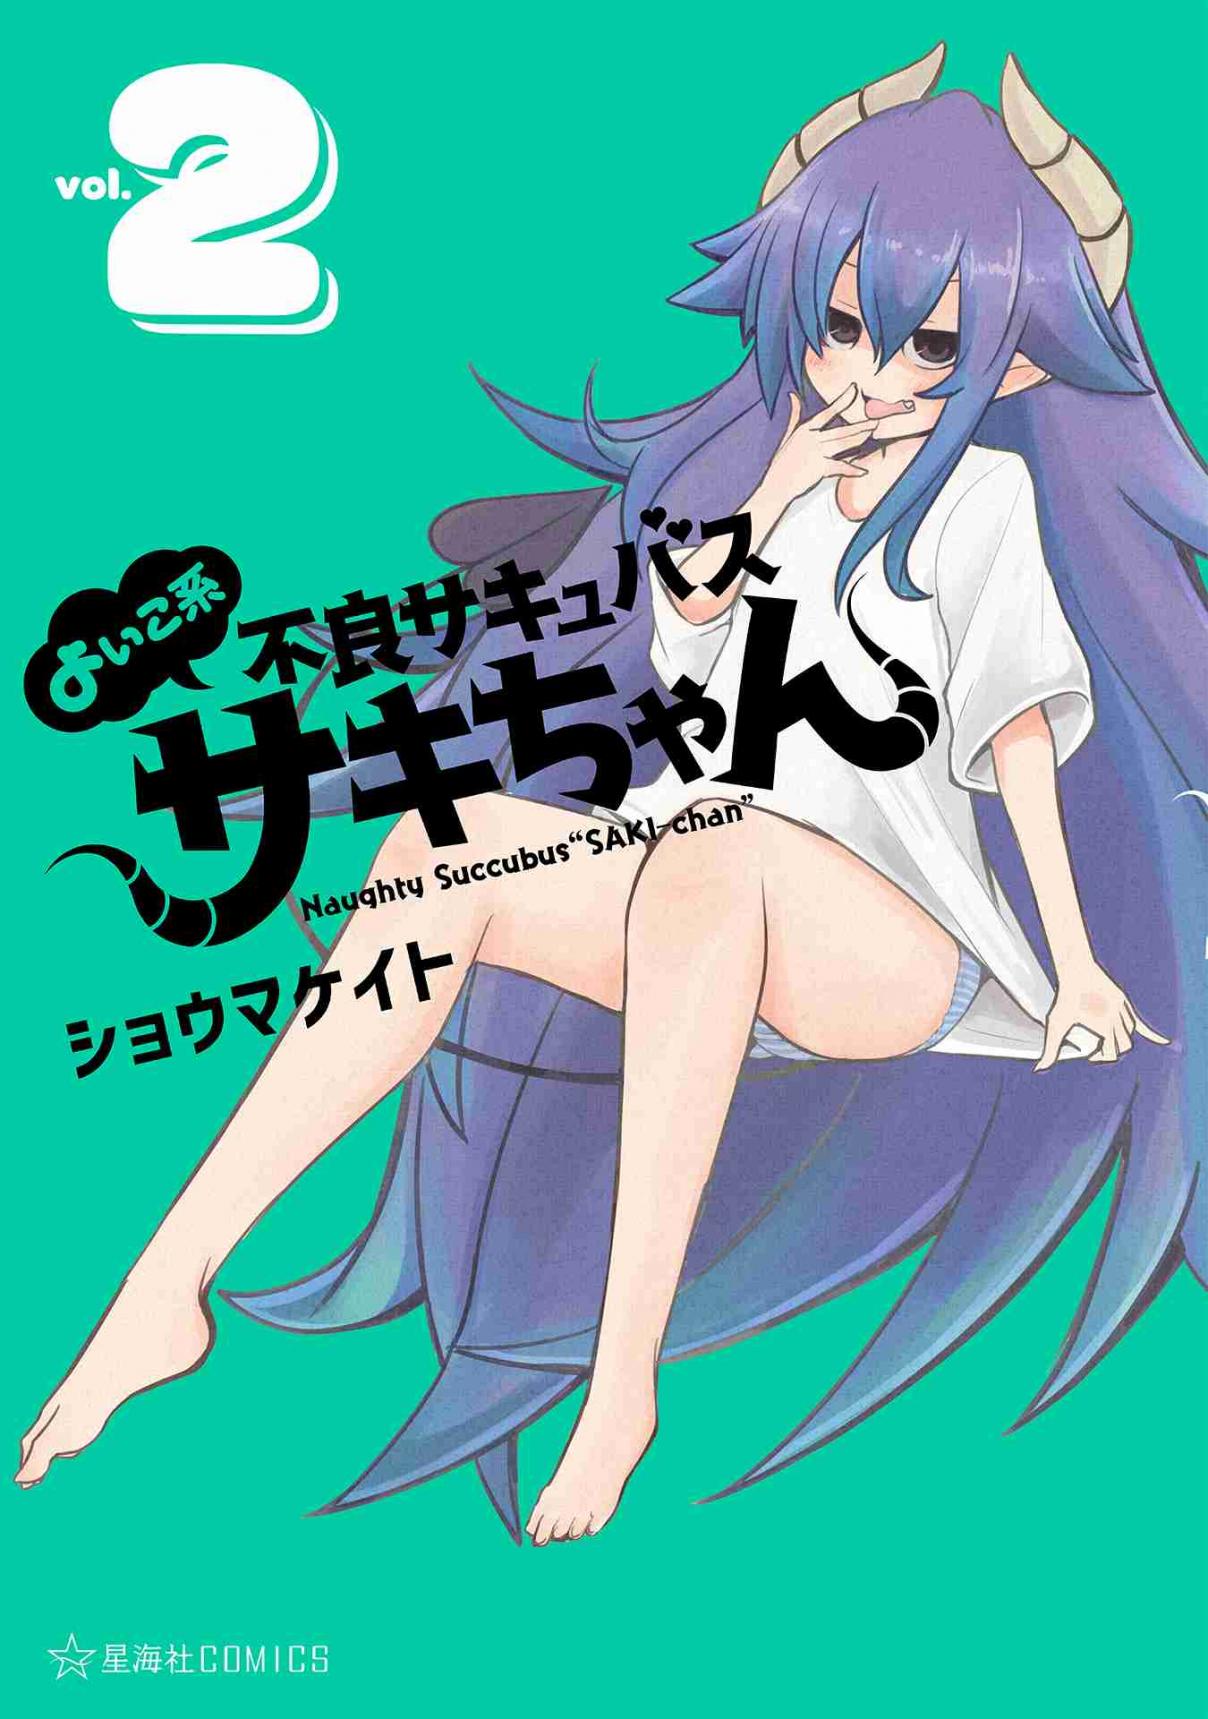 Naughty Succubus "Saki chan" Vol. 2 Ch. 99 No